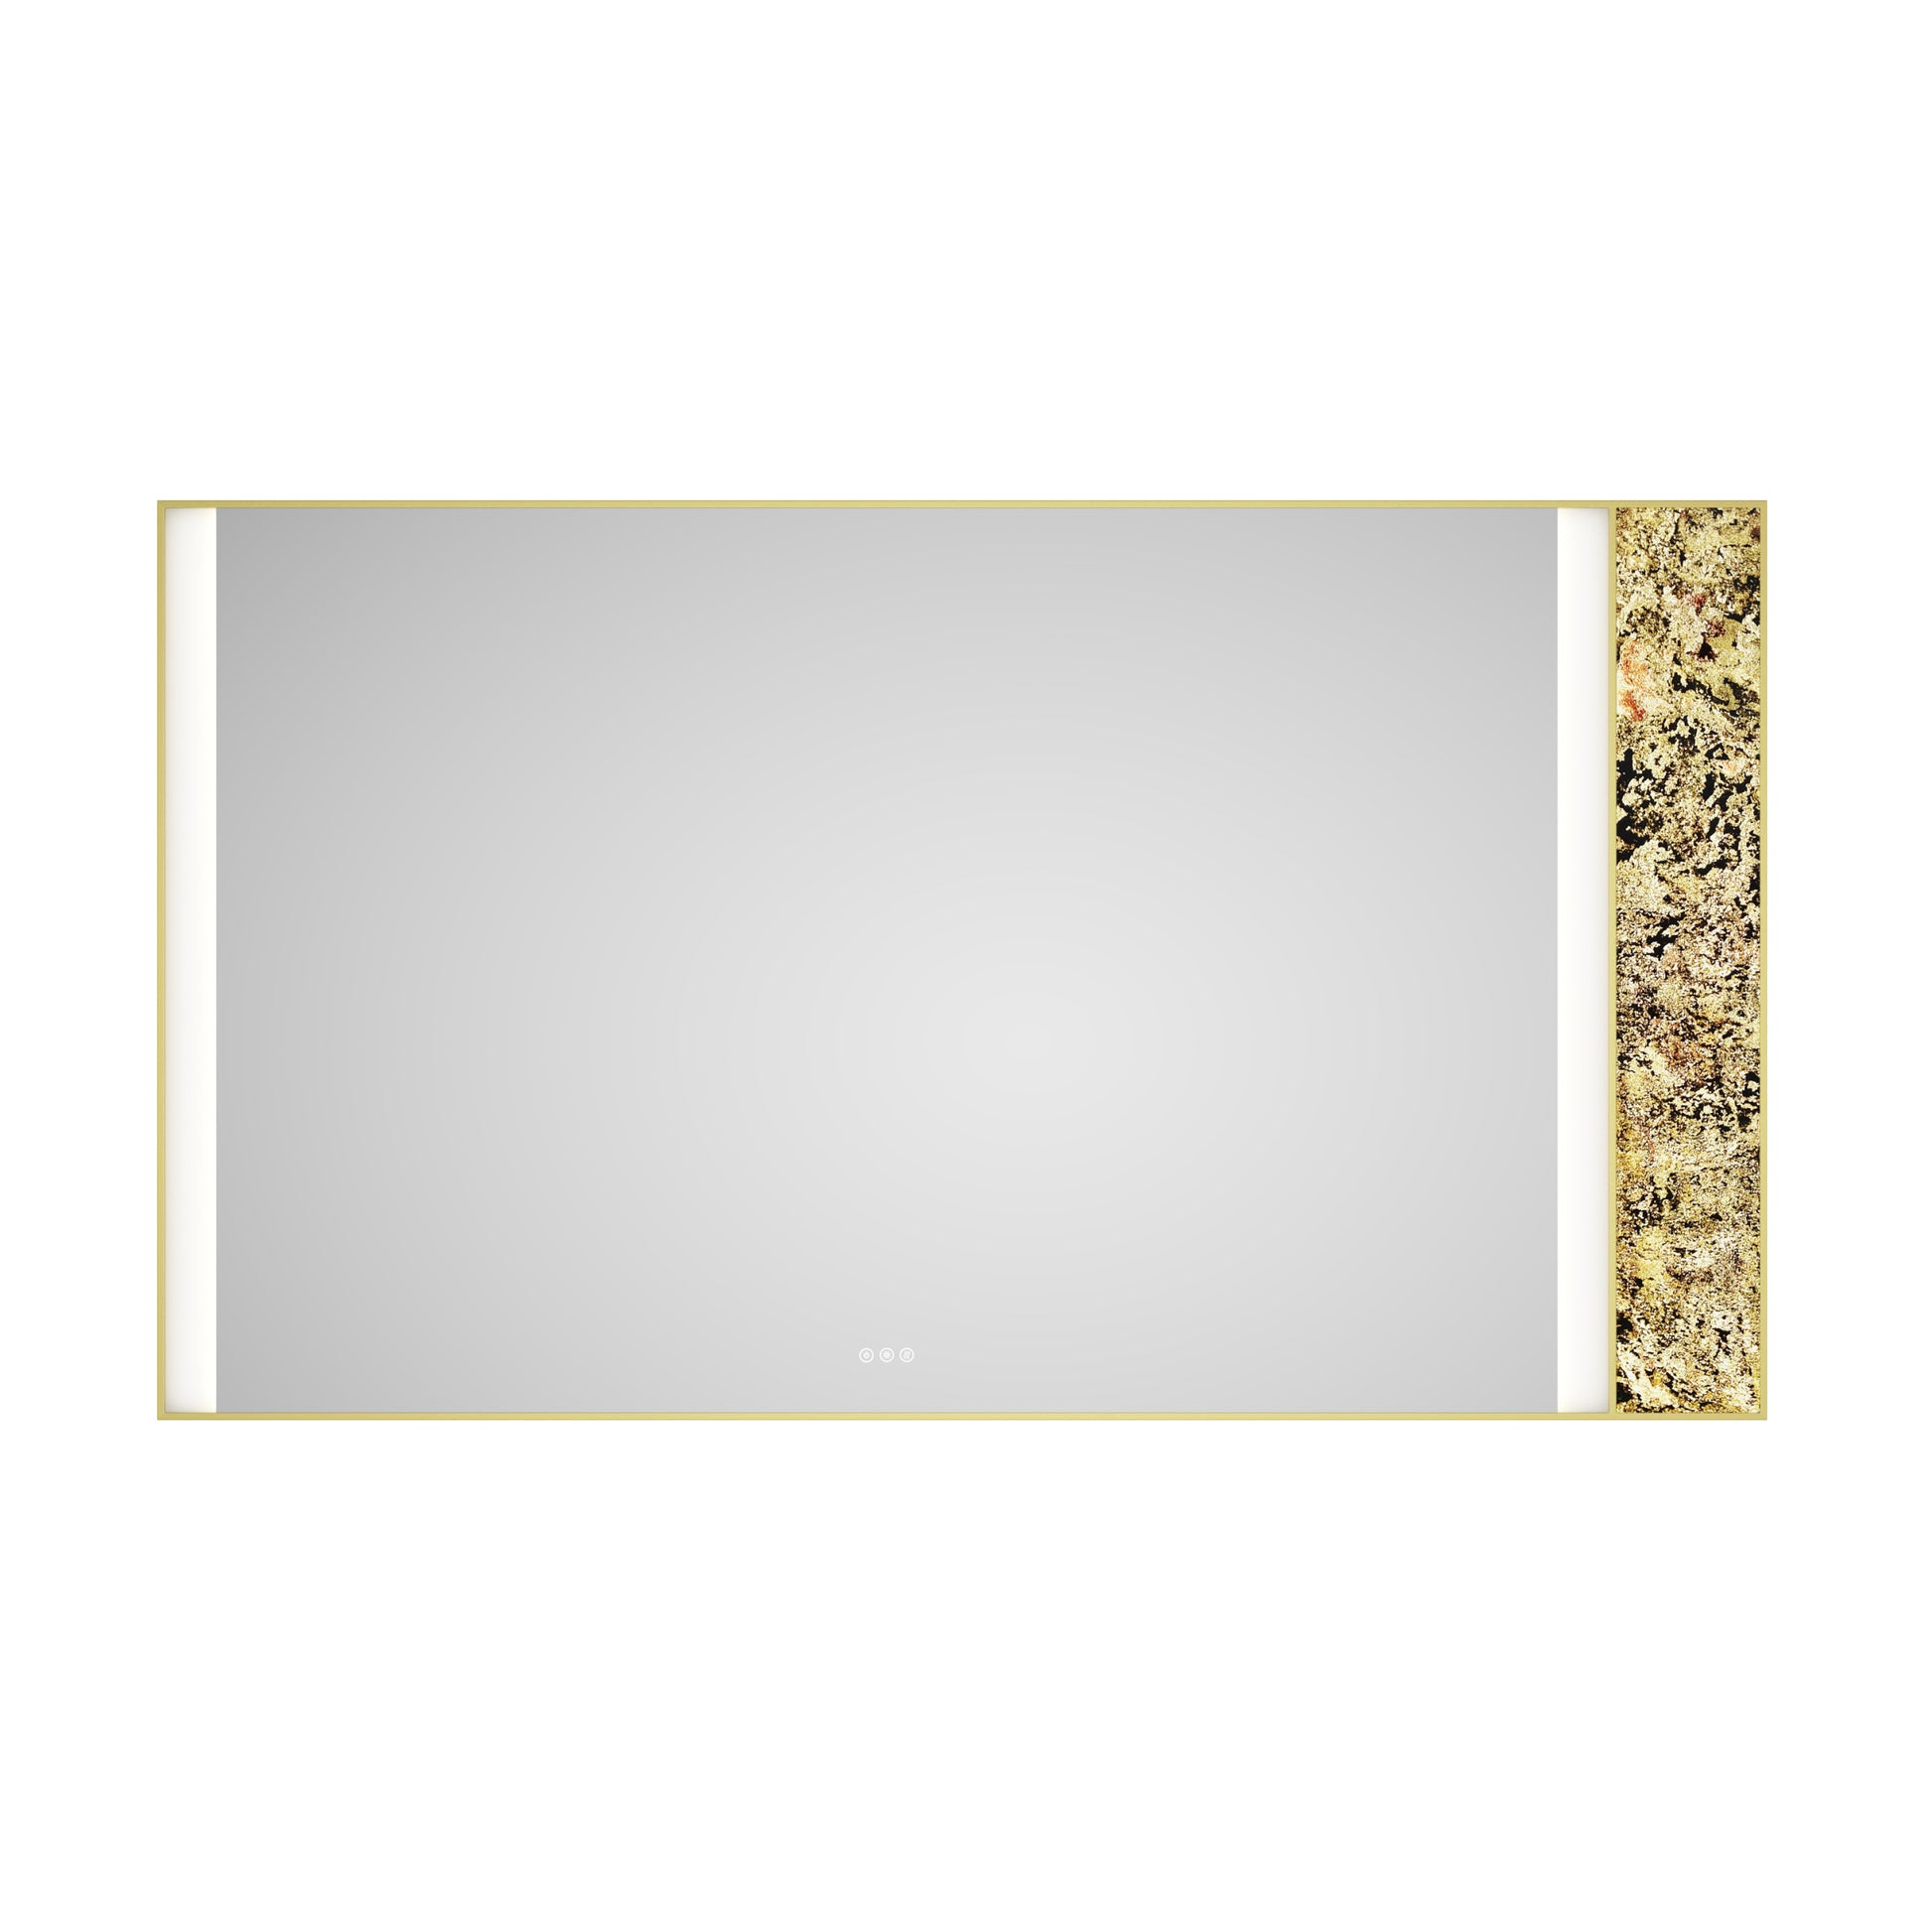 84x 48Inch LED Mirror Bathroom Vanity Mirror with Back matt black-aluminium